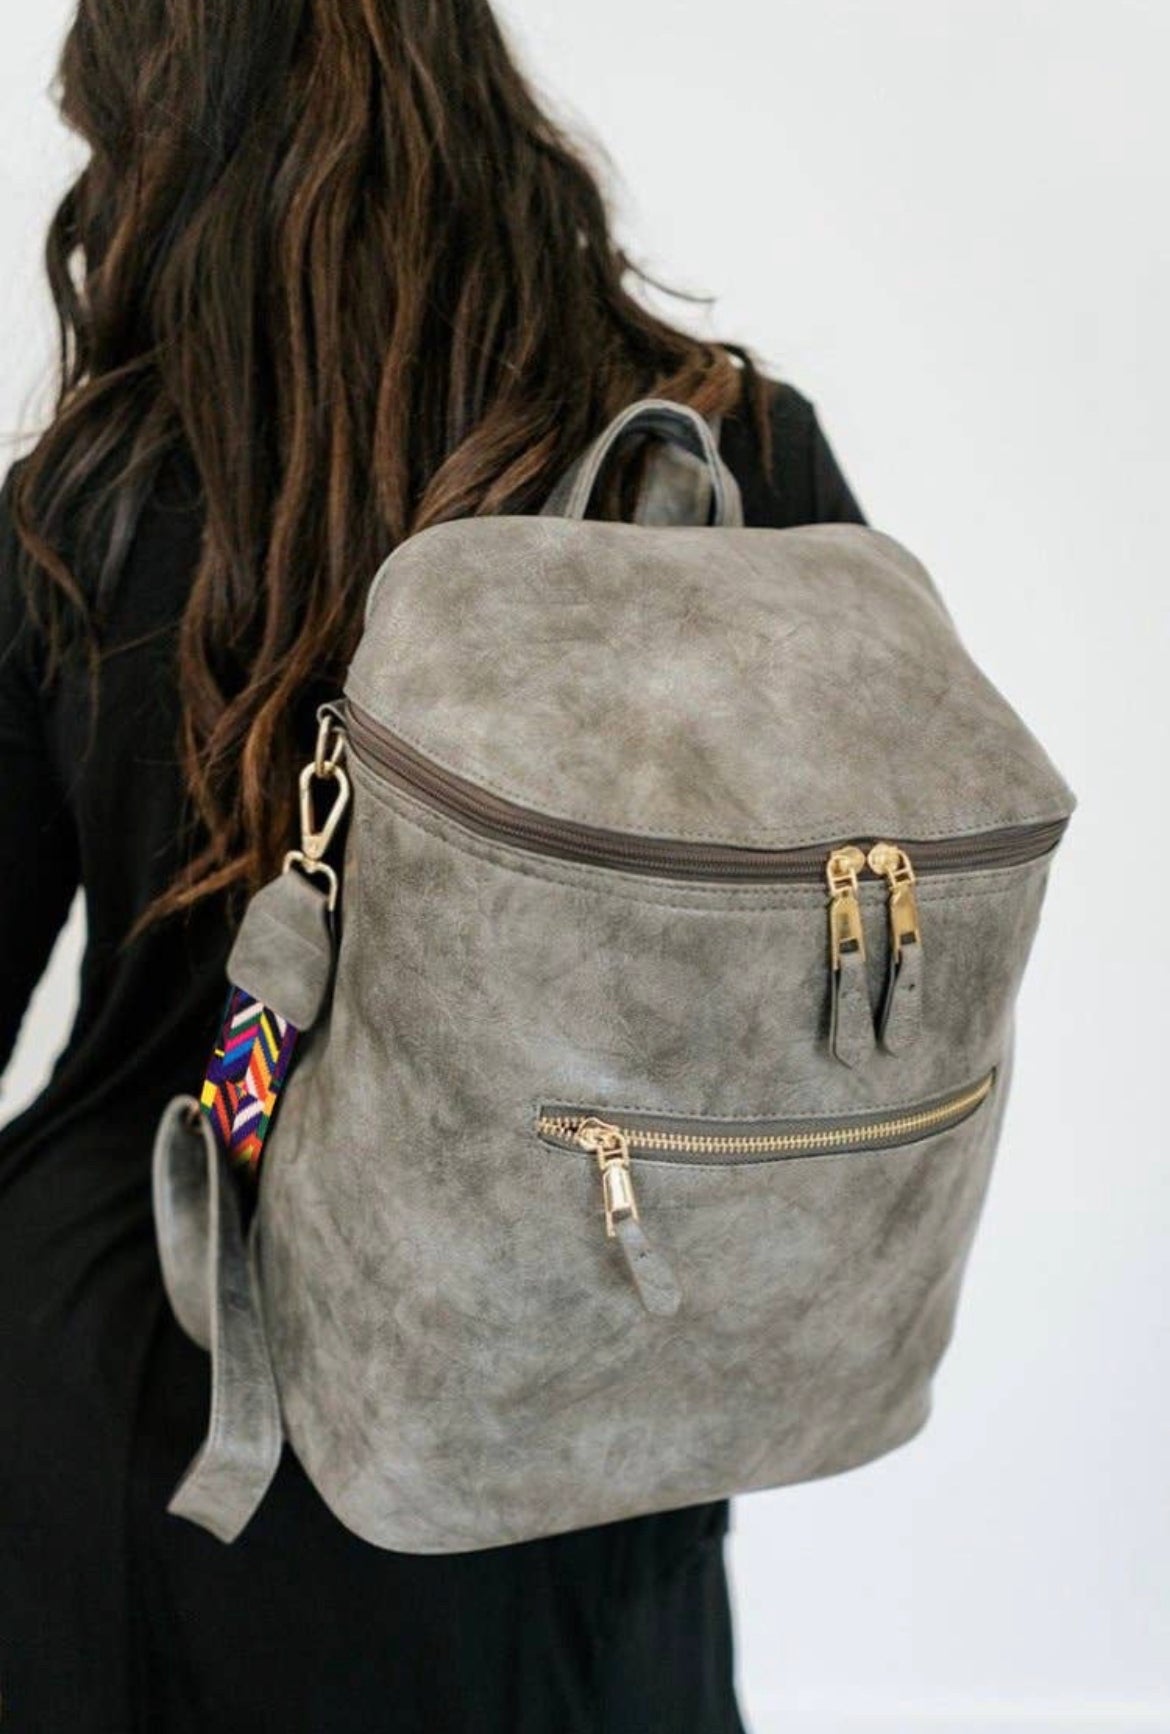 Double pocket backpack purse